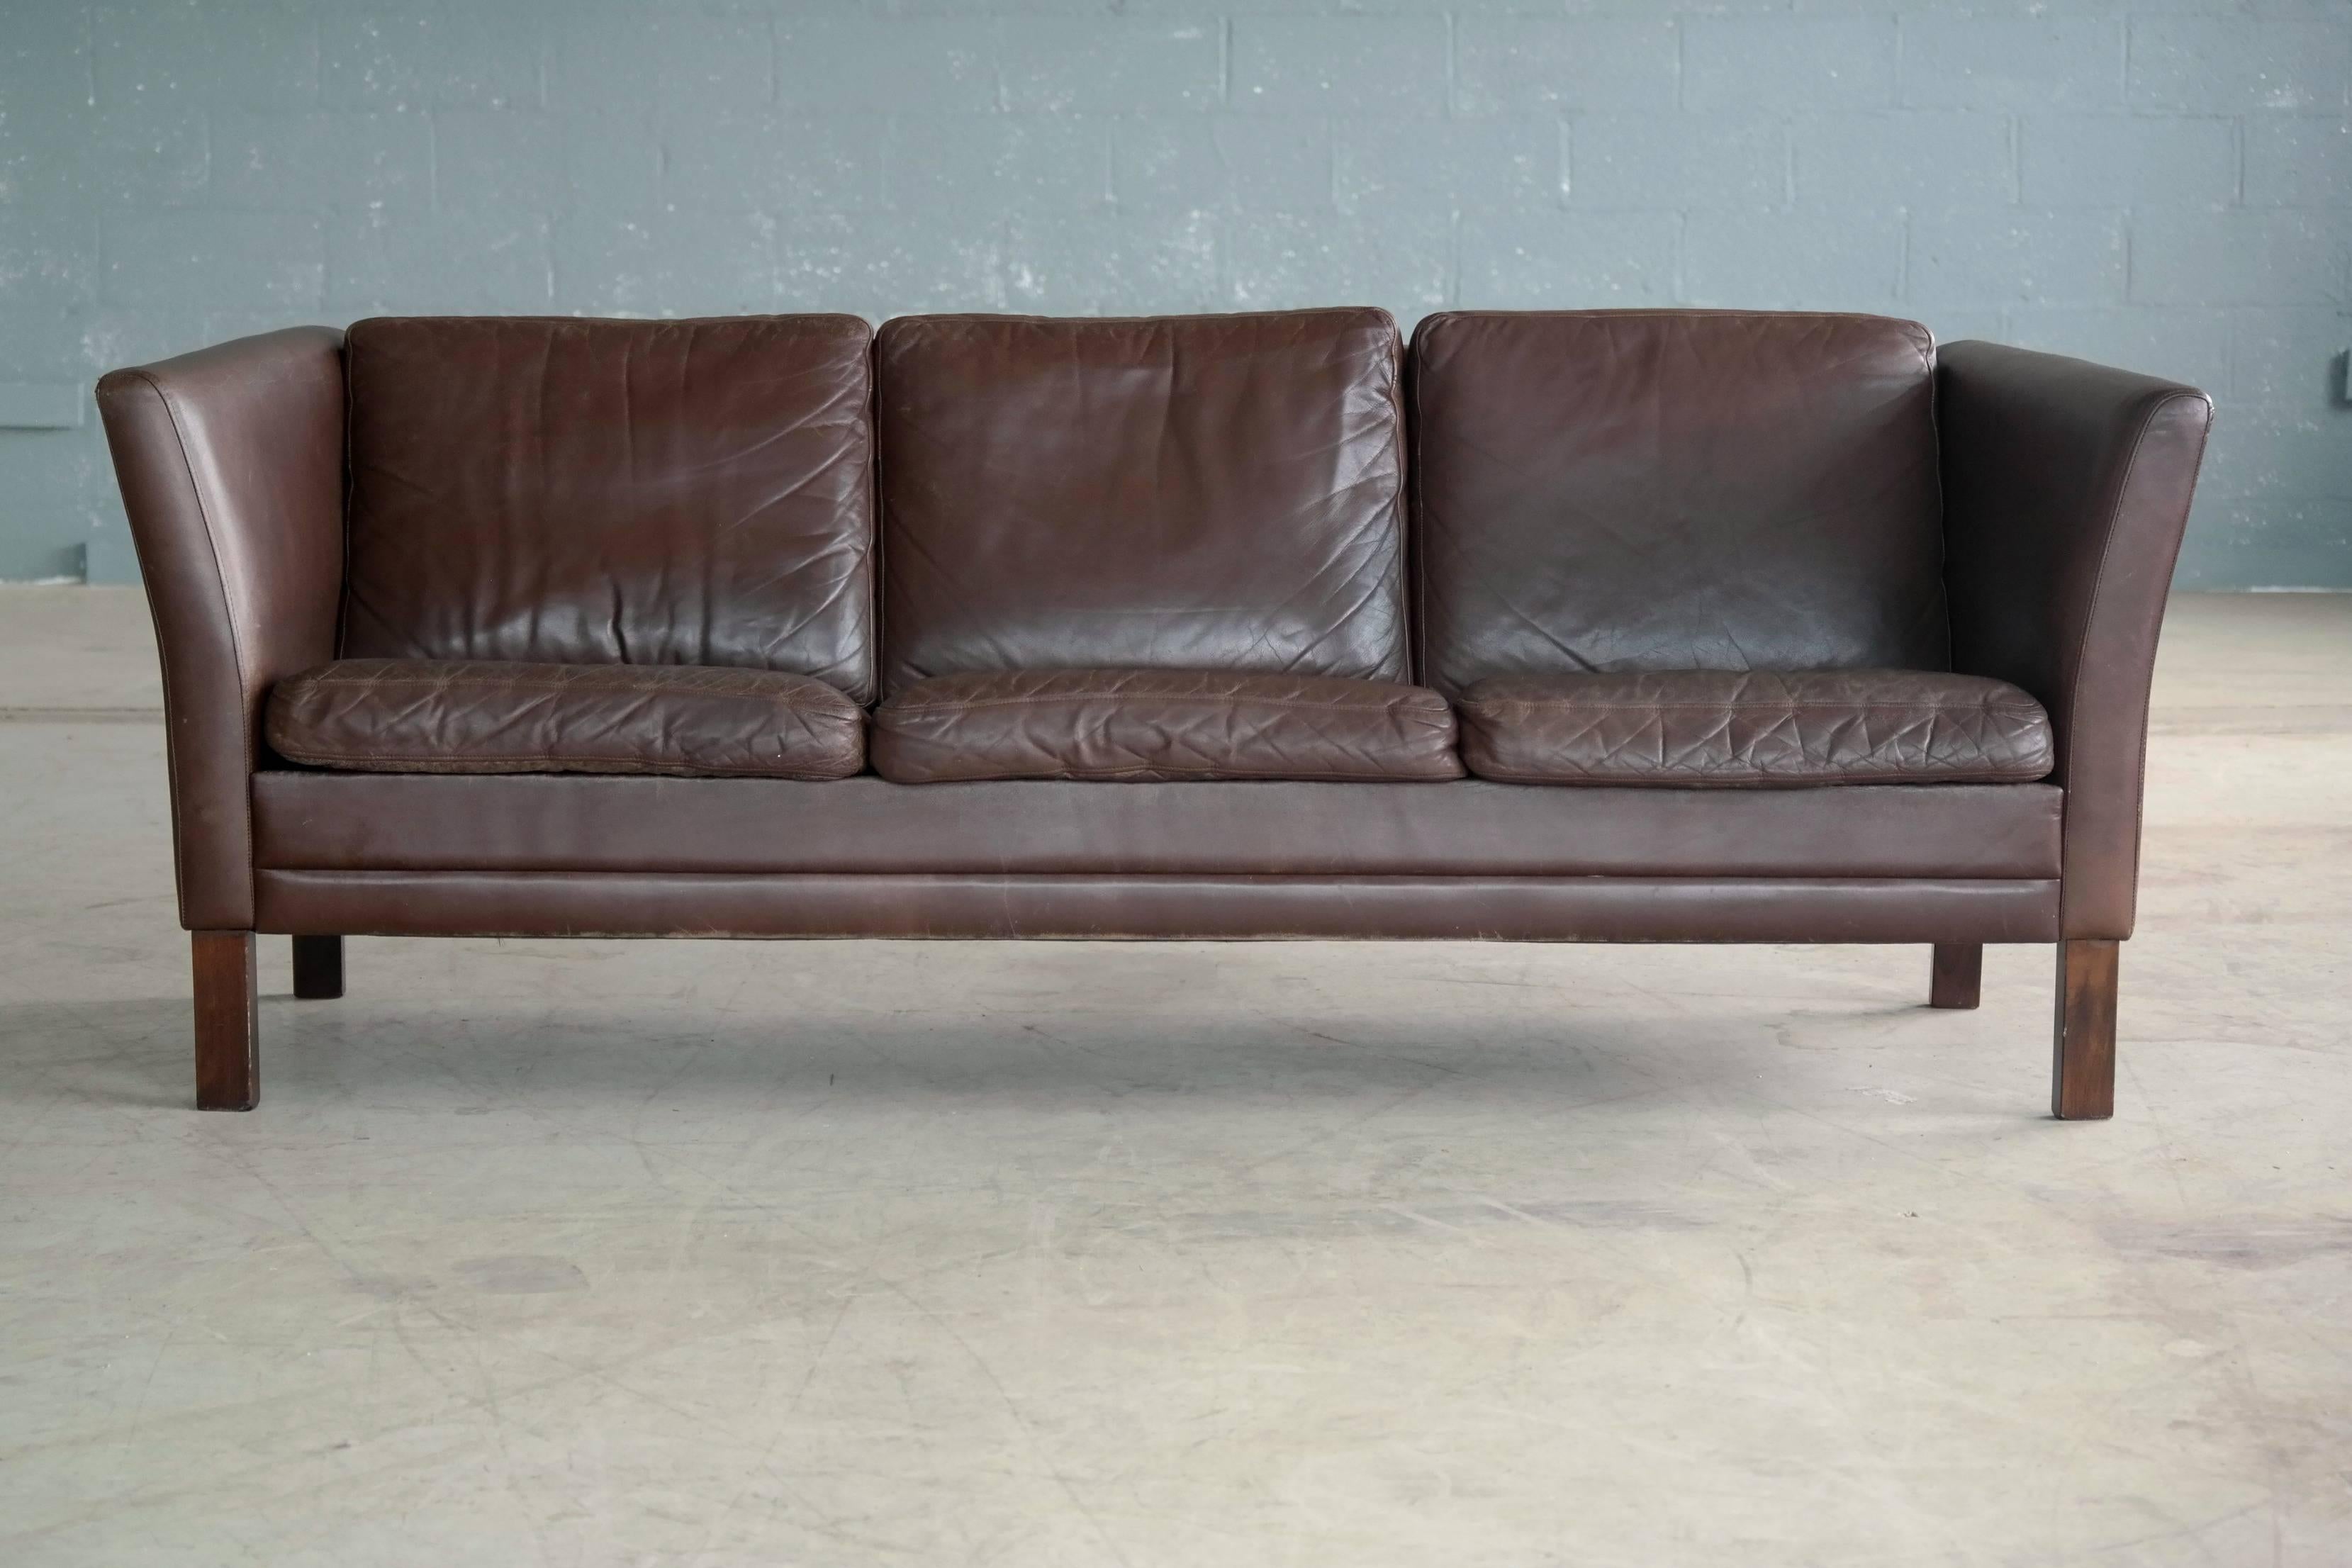 Danish Borge Mogensen Style Three-Seat Sofa in Chocolate Leather by Mogens Hansen